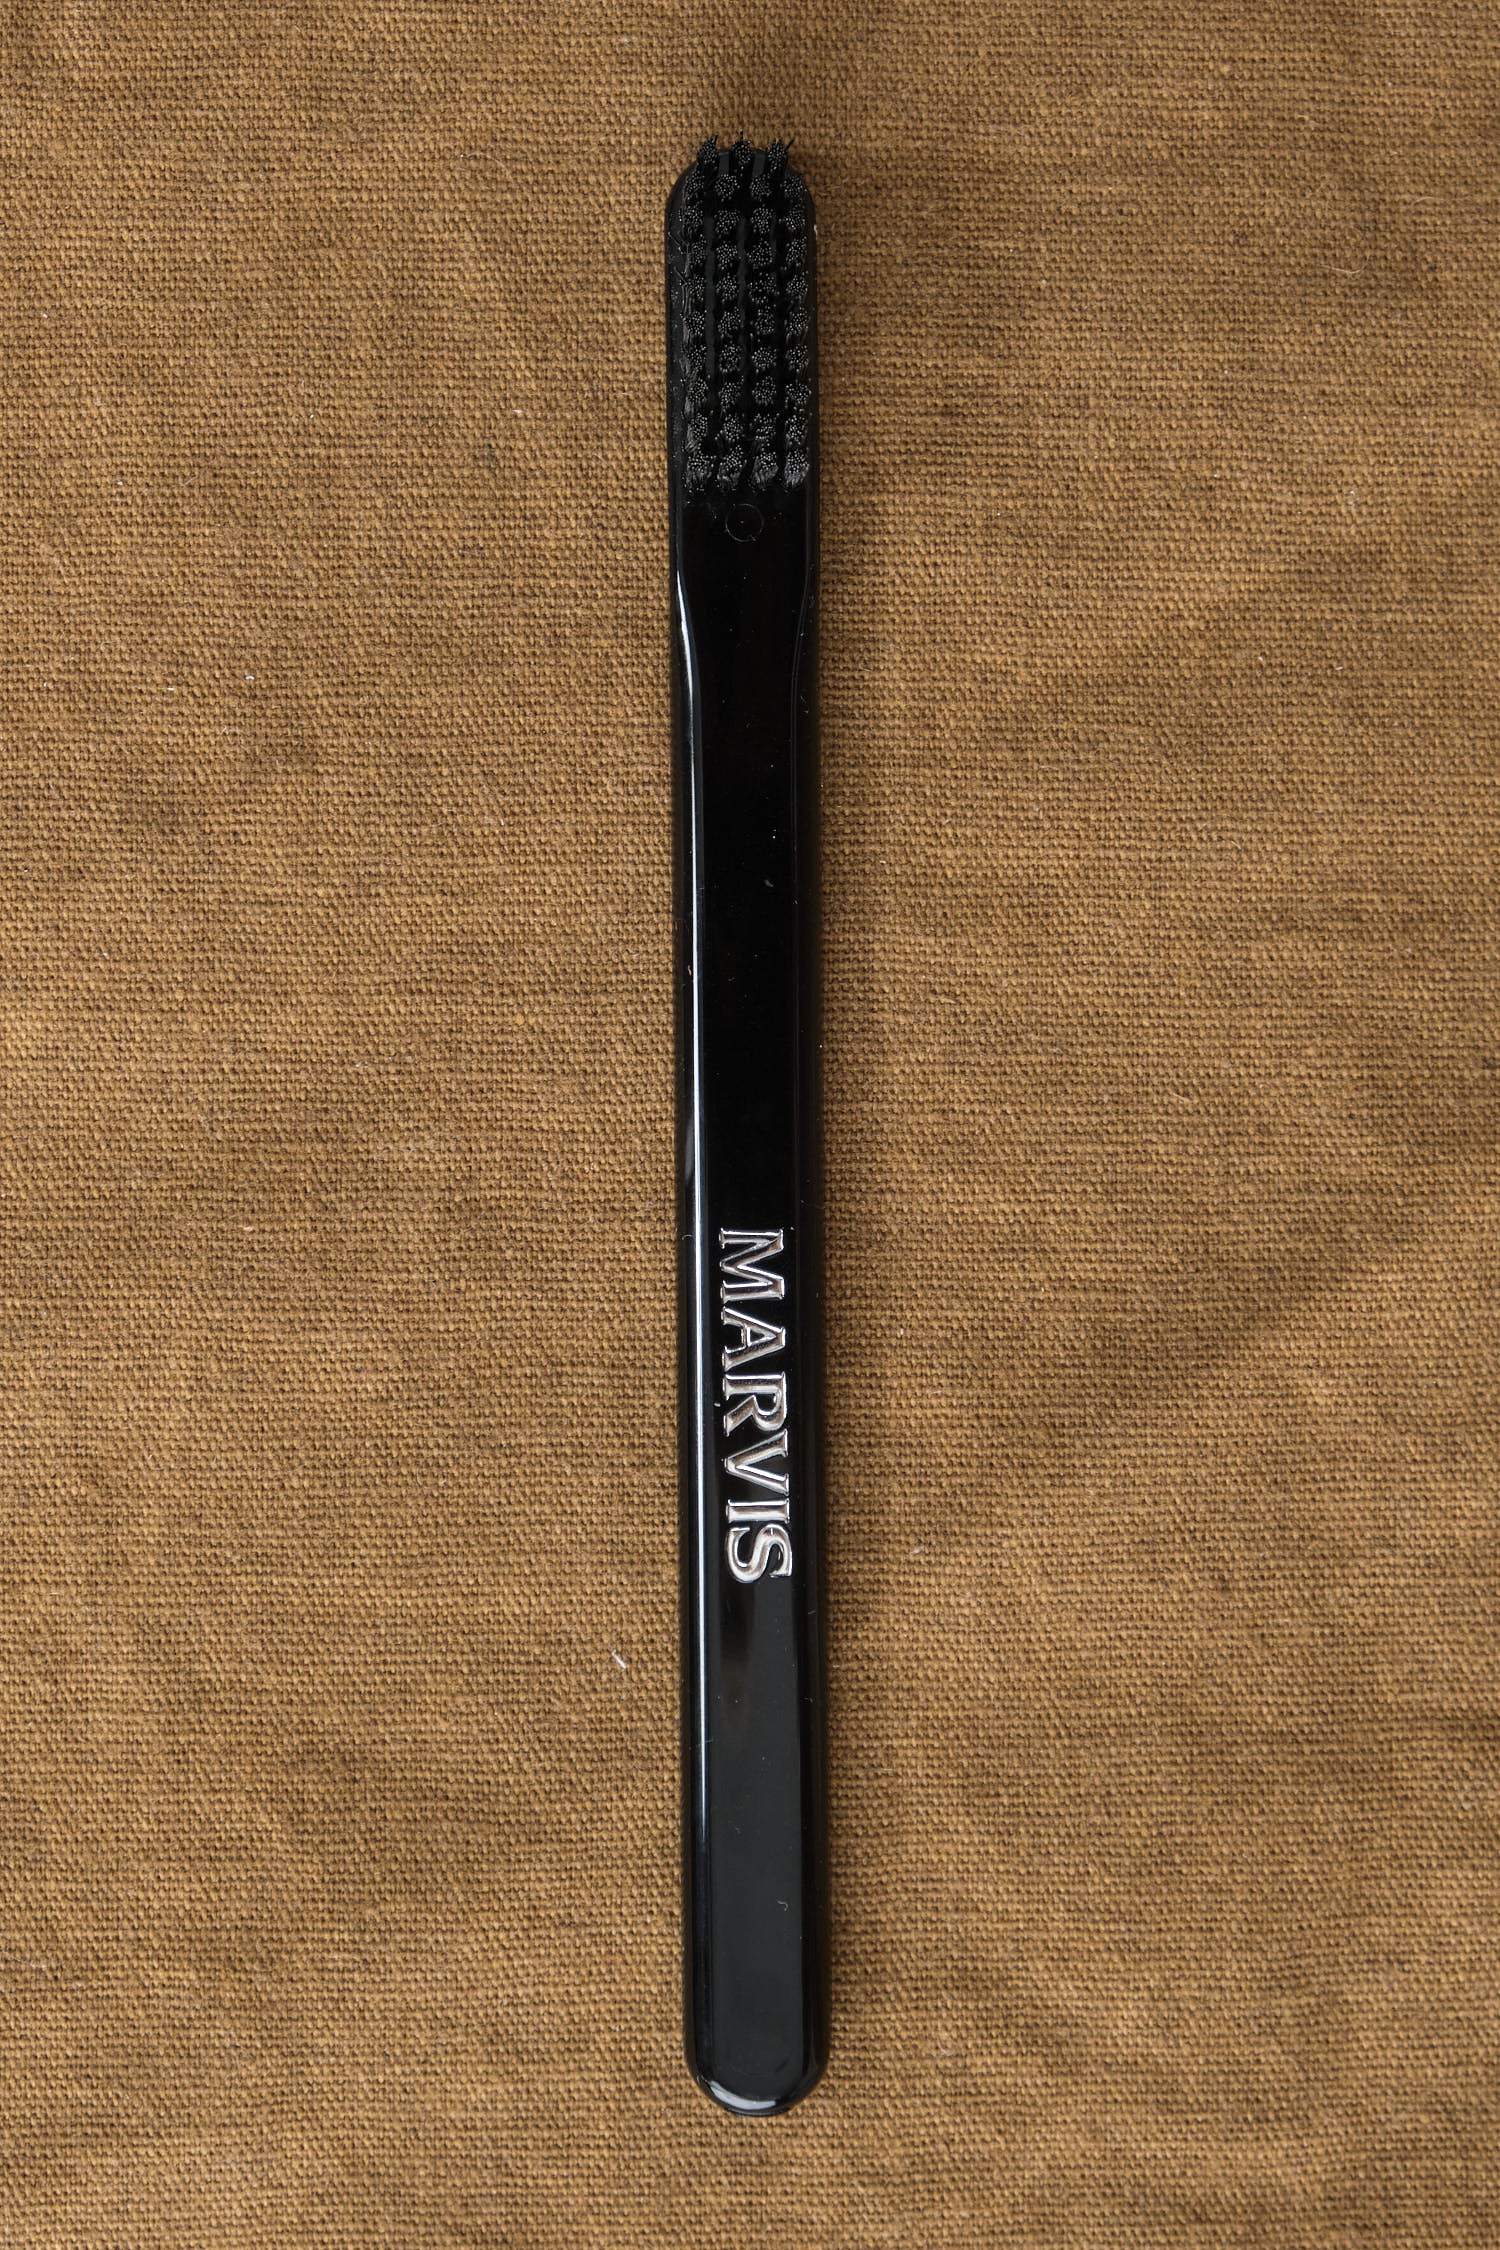 Marvis Toothbrush in Black